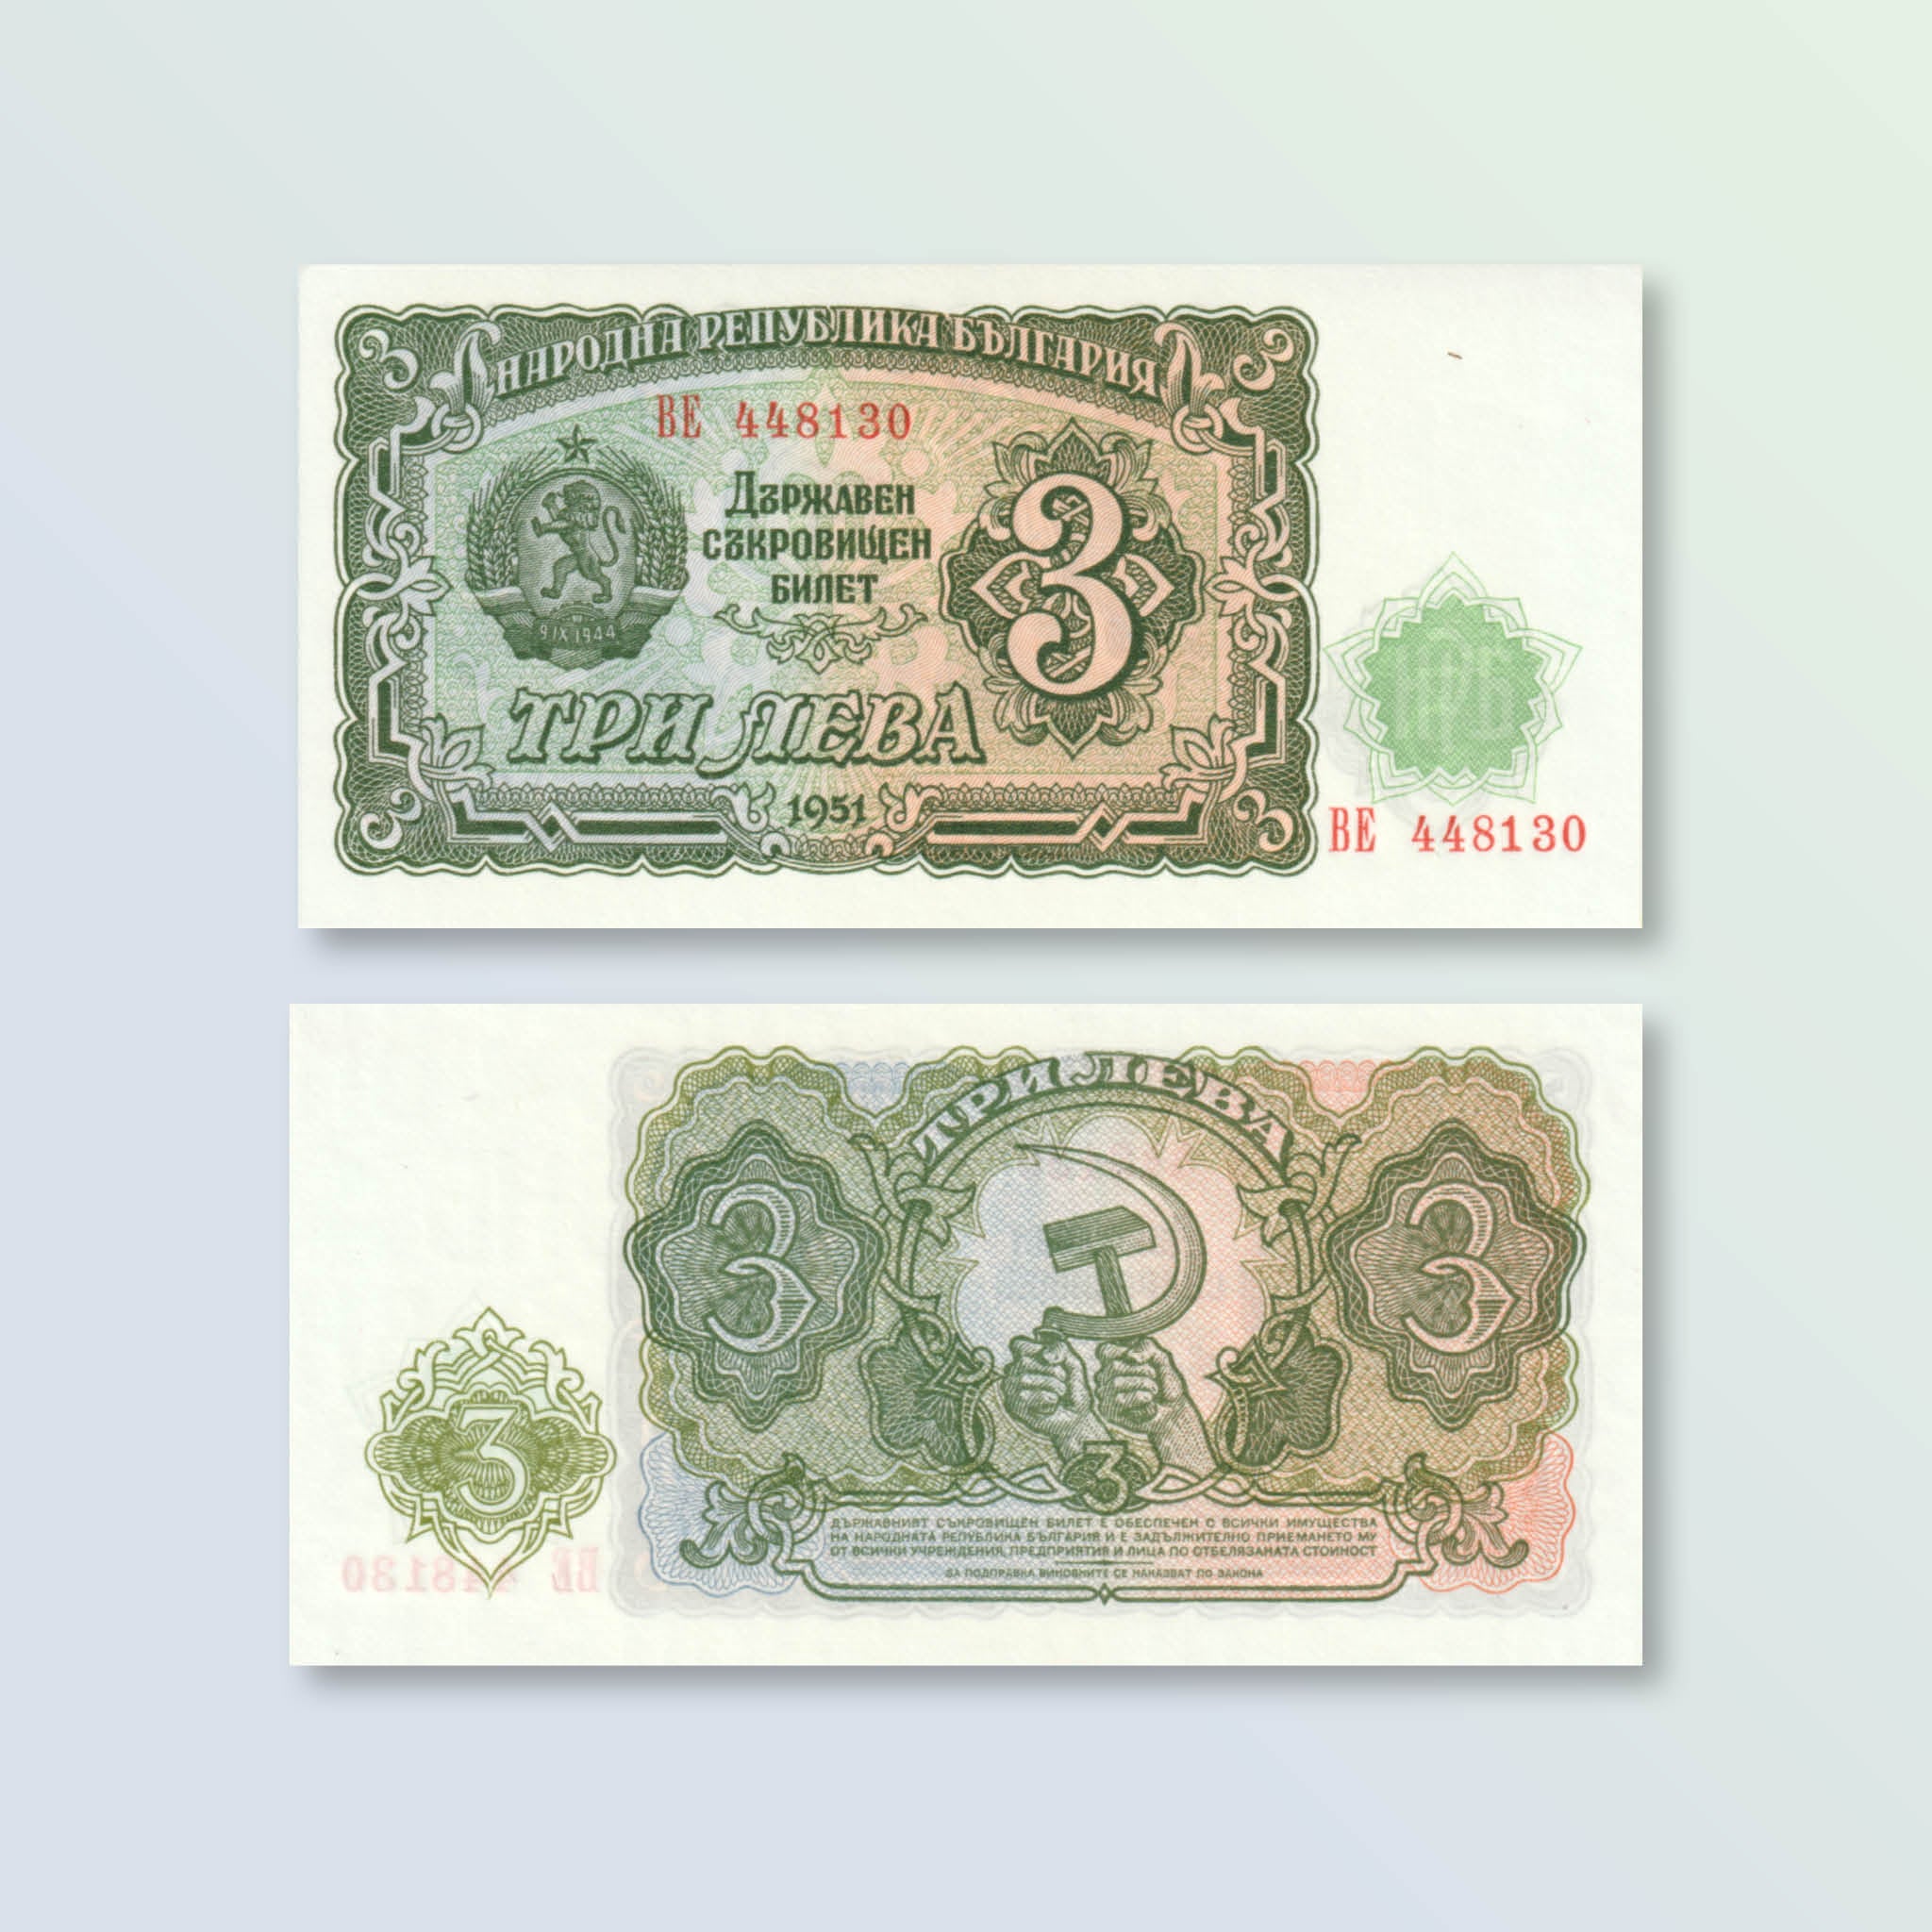 Bulgaria 3 Leva, 1951, B188a, P81, UNC - Robert's World Money - World Banknotes